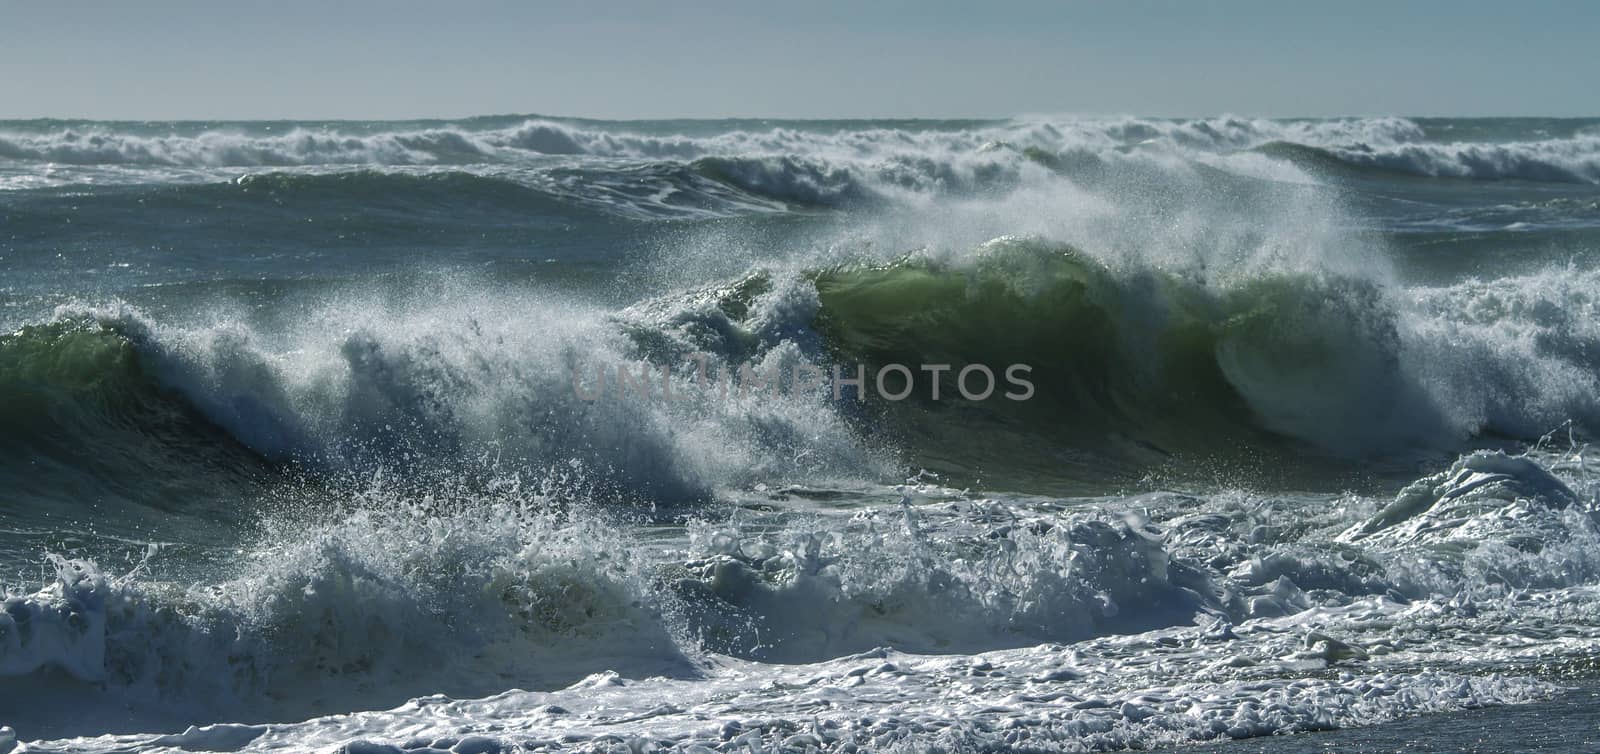 Ocean waves in New Zealand by Chudakov